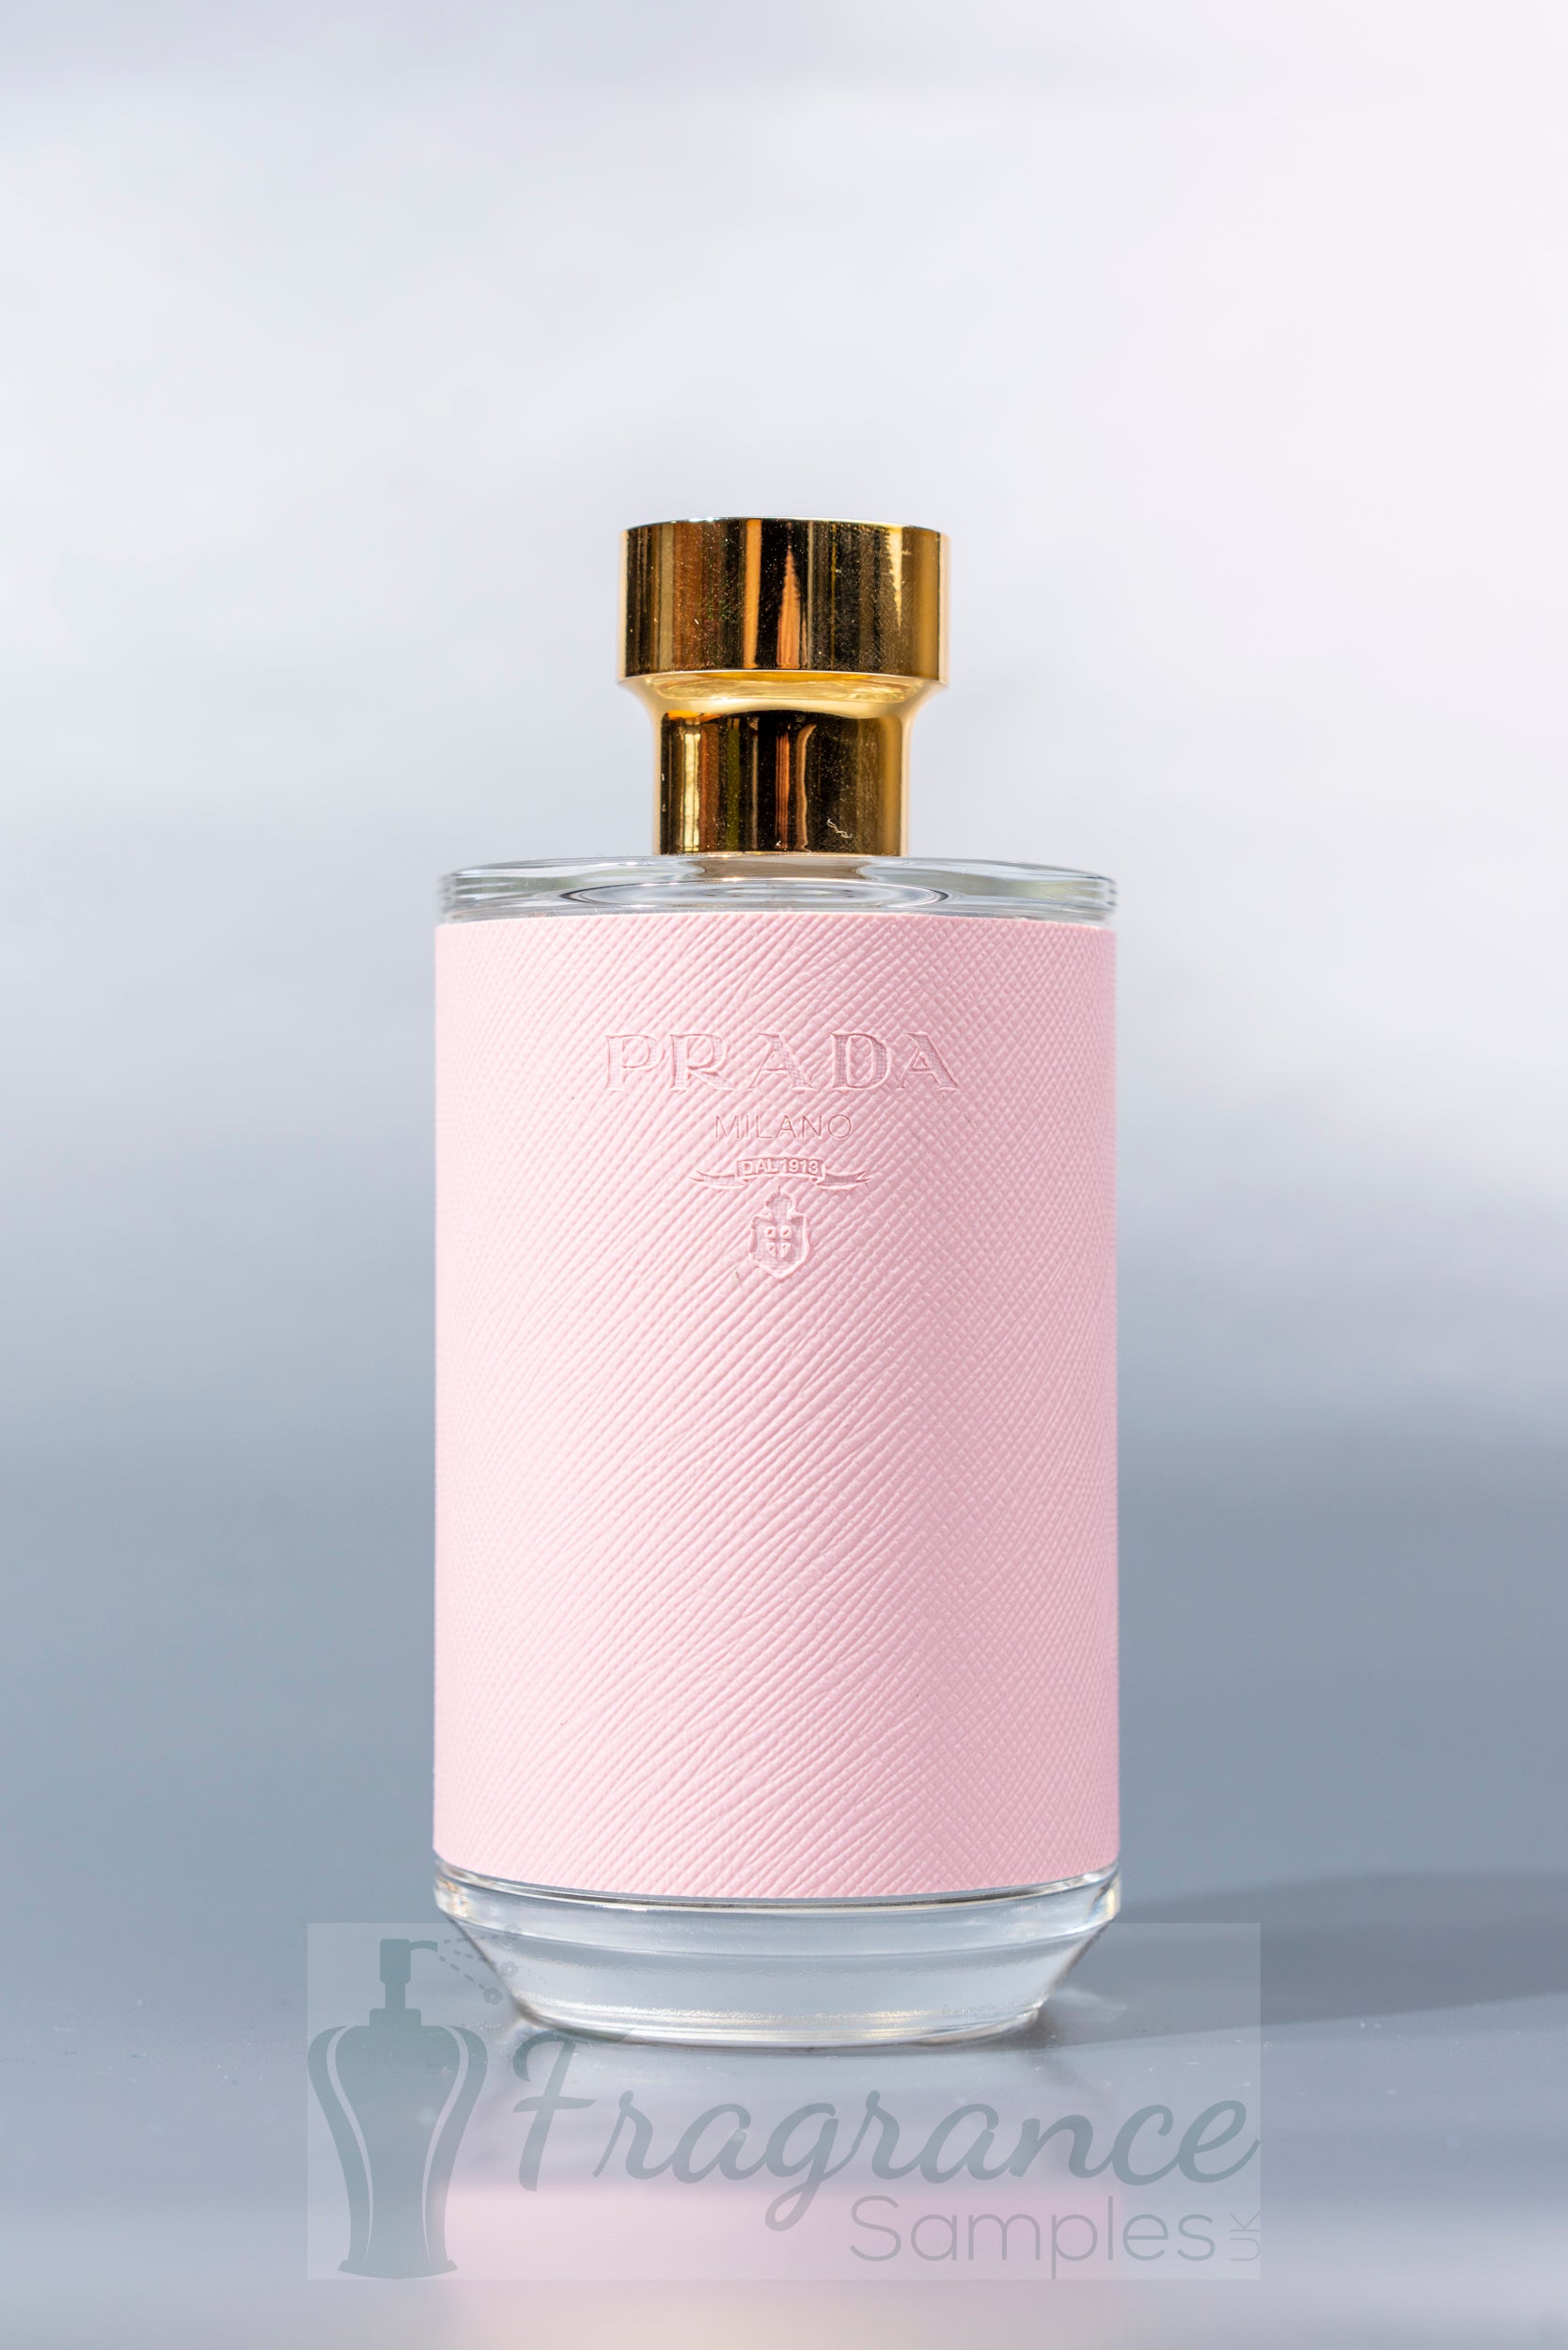 Prada La Femme L'Eau – Fragrance Samples UK